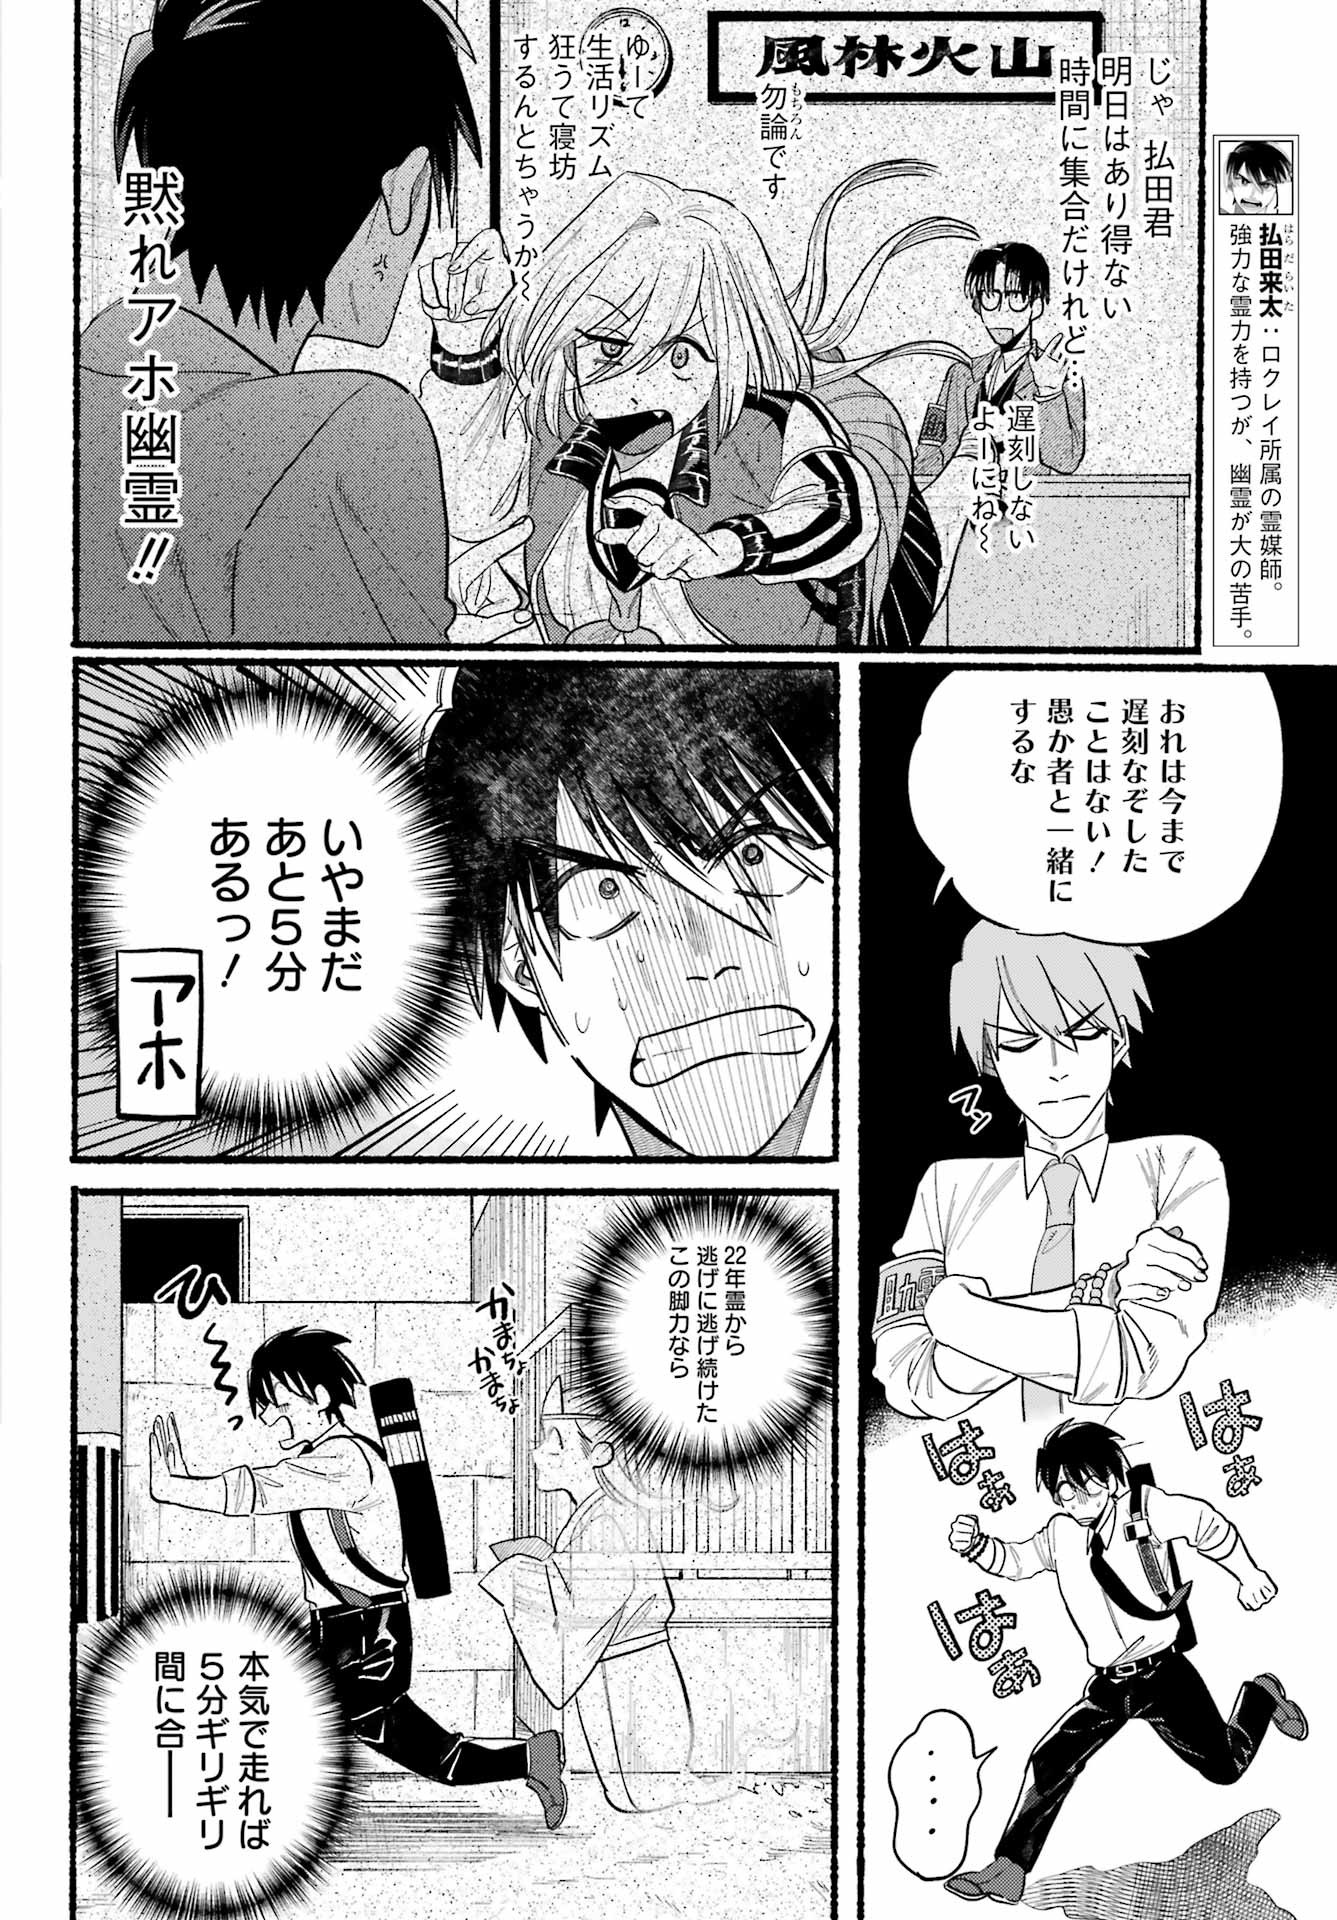 Rokurei - Tenseishi Rinne Kuyakusho Dairokkanbu Joreika Katsudouki - Chapter 08 - Page 4